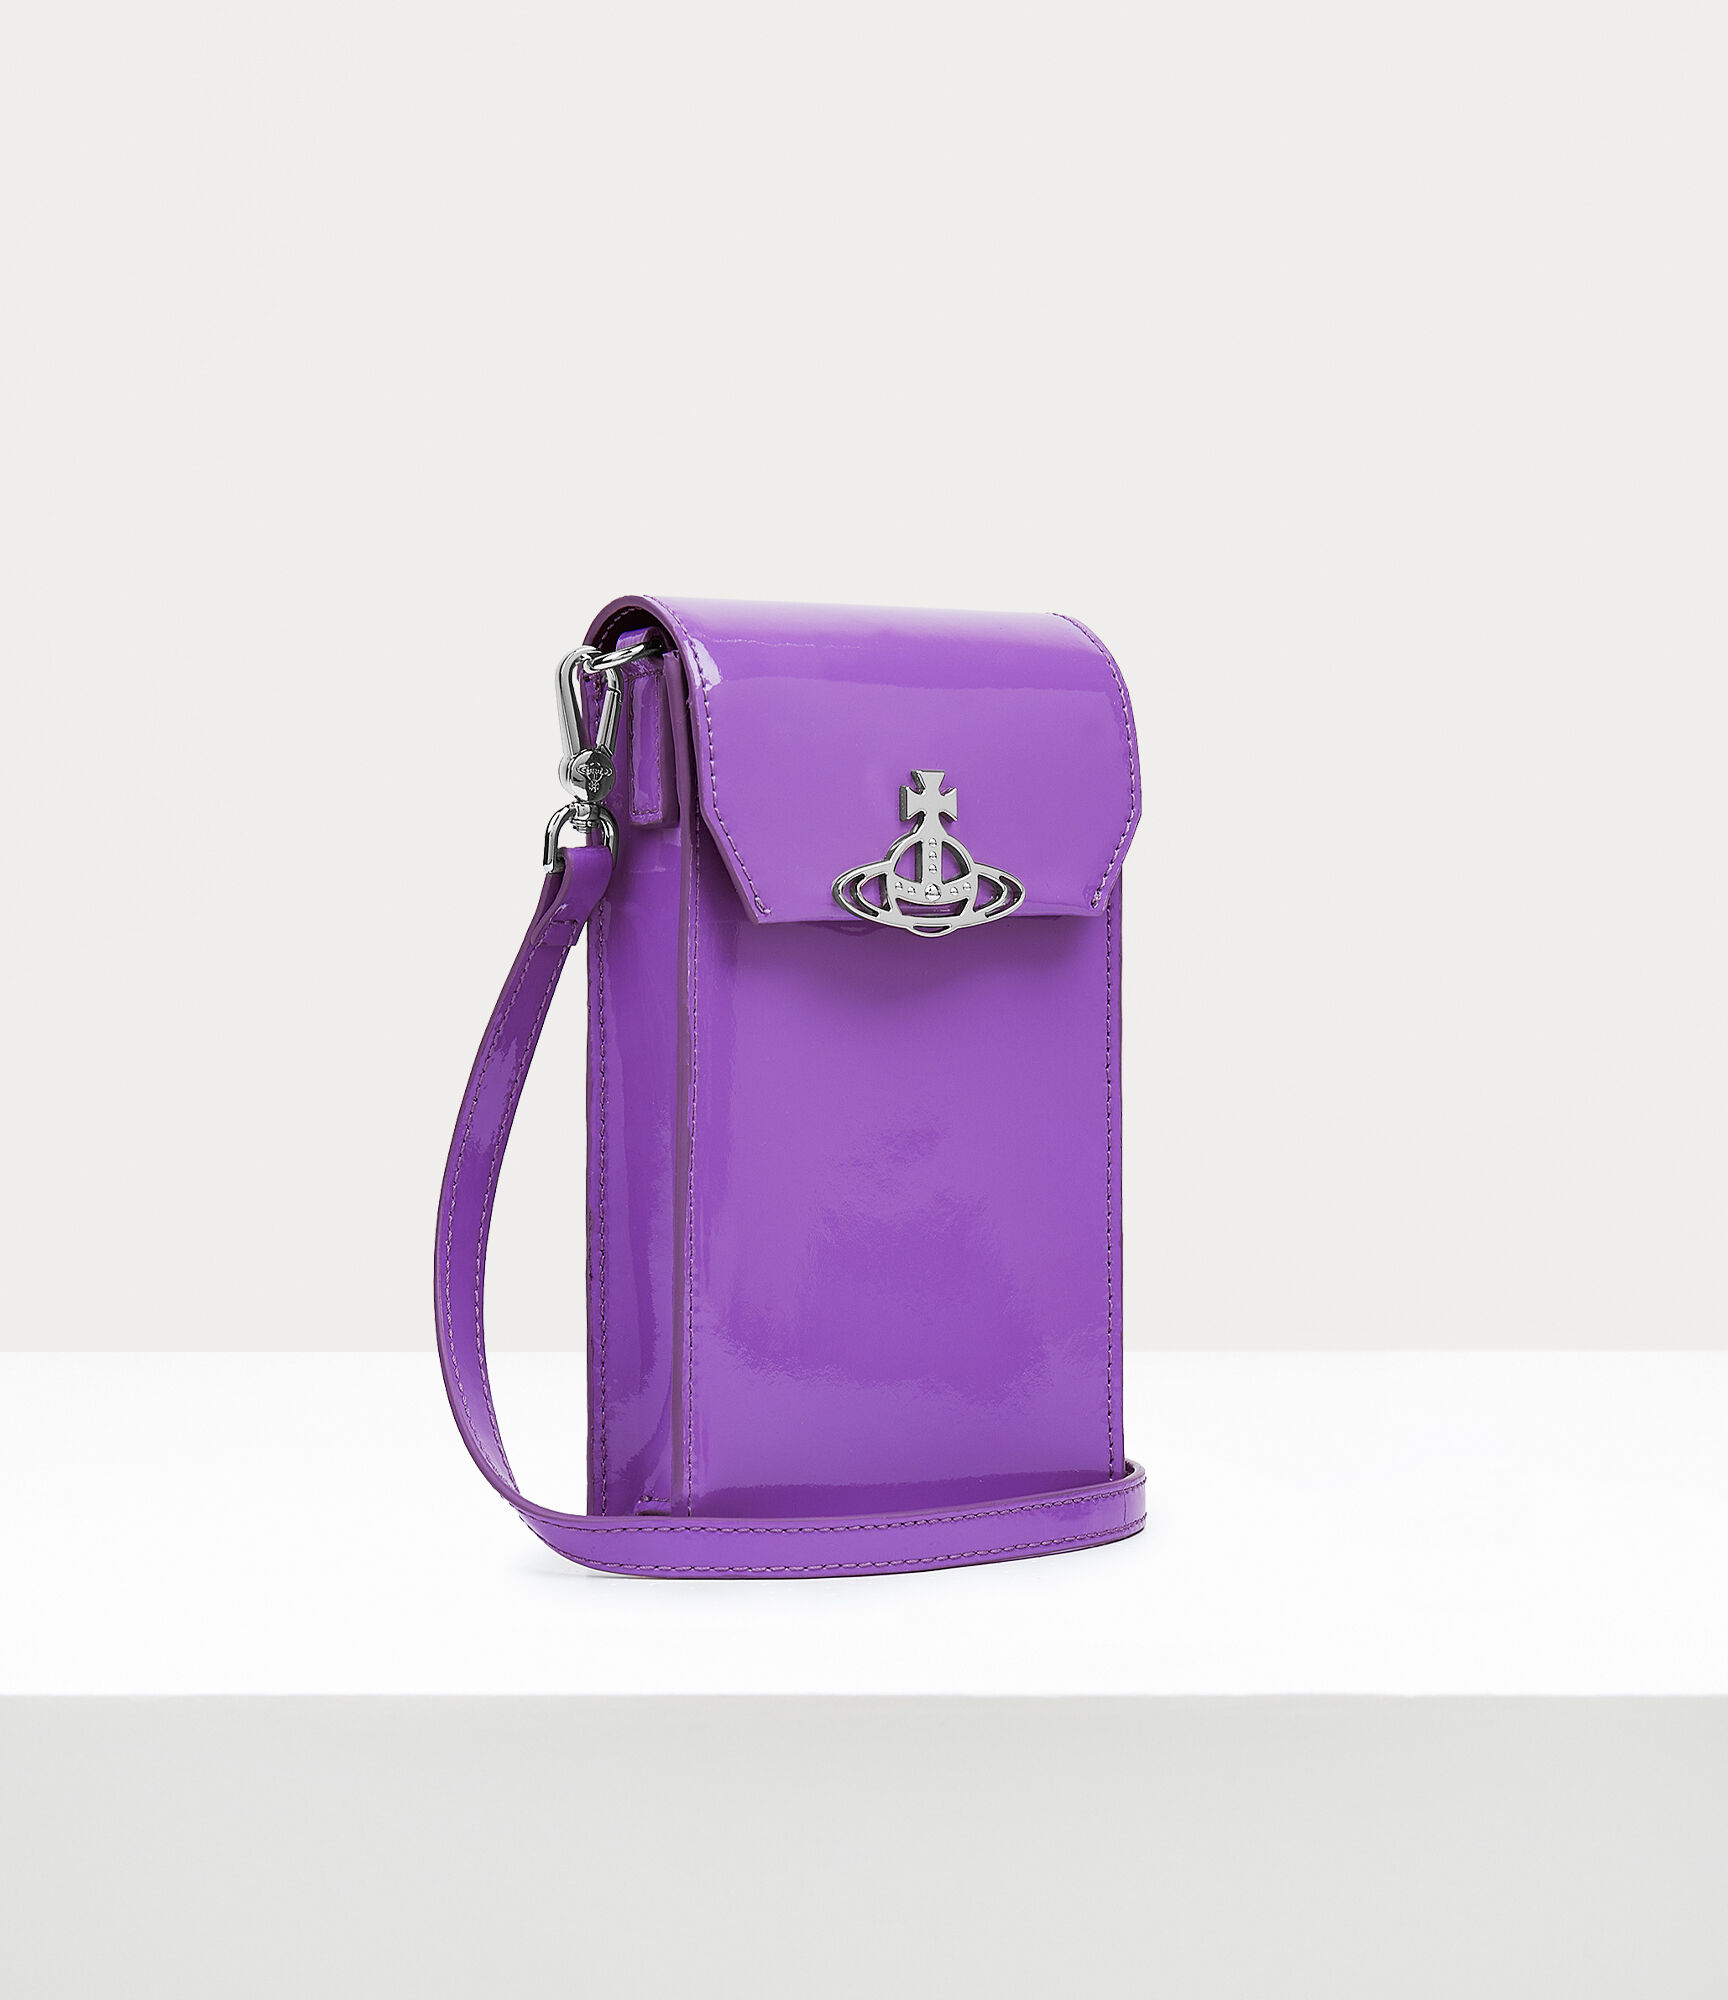 Shiny Patent Phone Bag in PURPLE | Vivienne Westwood®